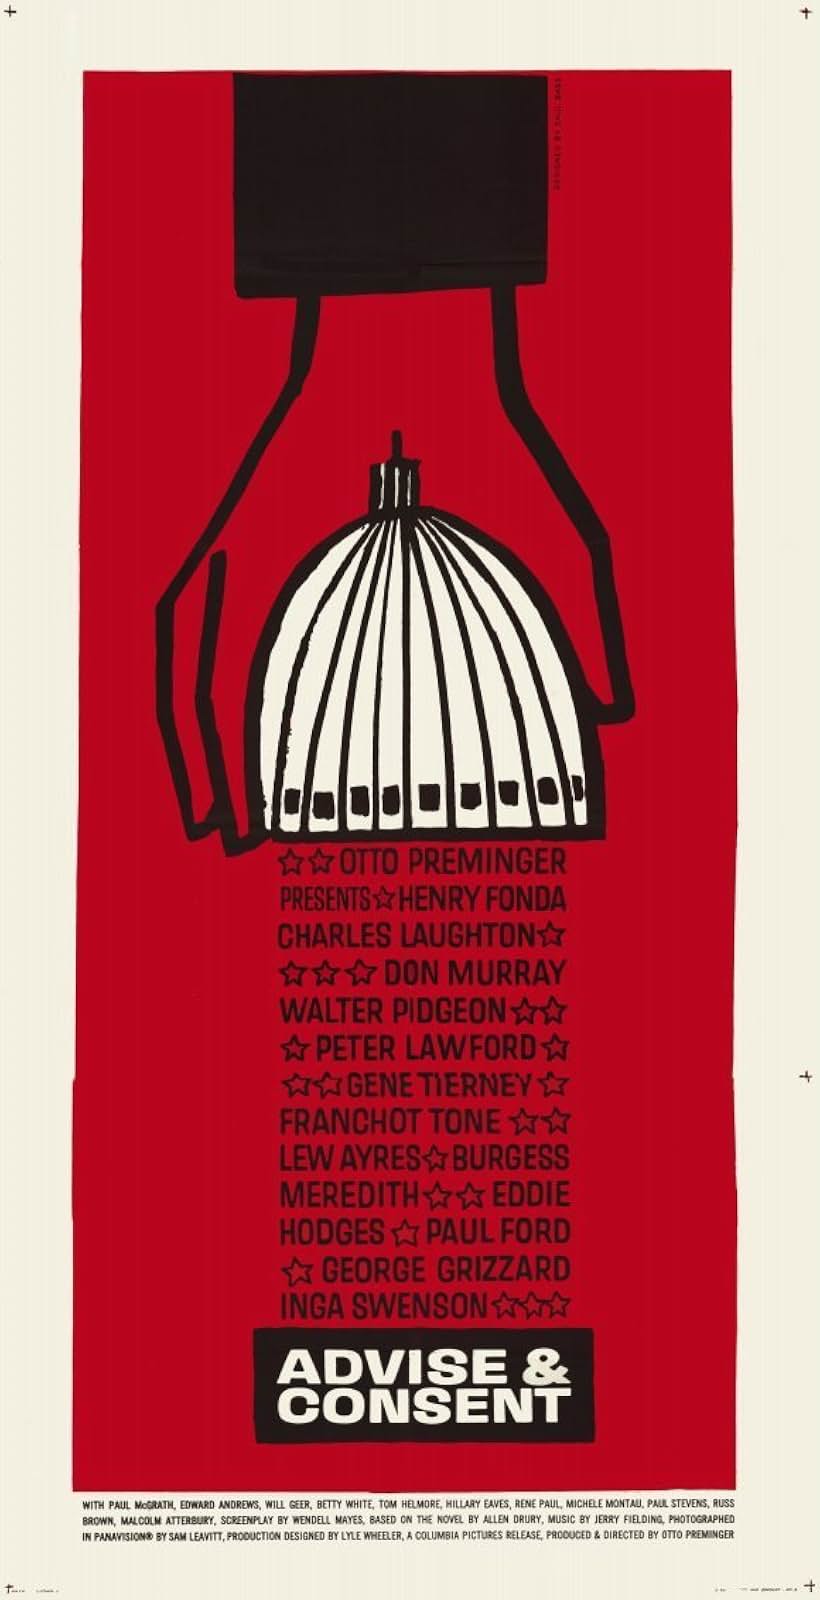 "Advise & Consent" (Saul Bass Poster) 1962